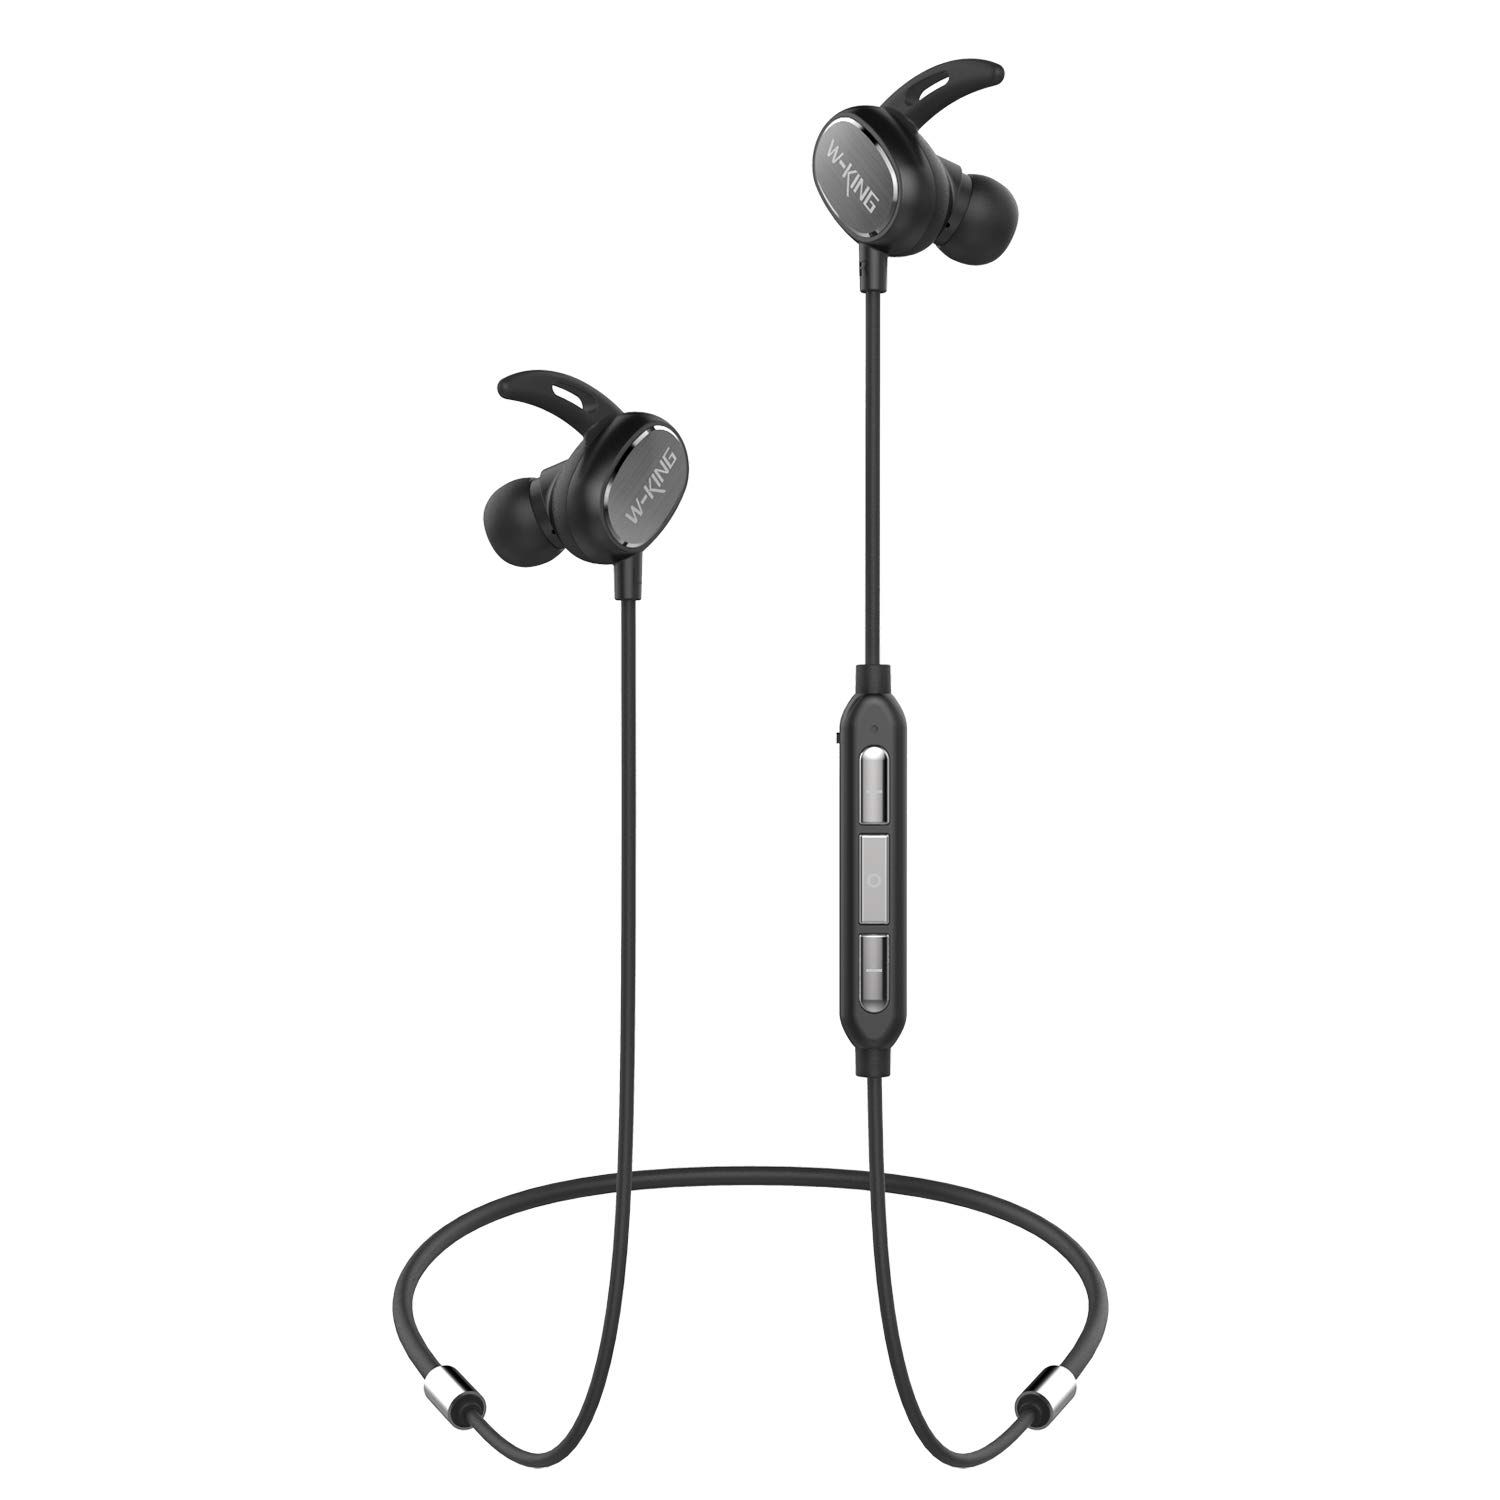 Brand new in box Bluetooth Headphones, Magnetic Wireless Earbuds, Bluetooth 4.2 Earphones Sport in-Ear Waterproof Stereo Sweatproof Headsets with Mic